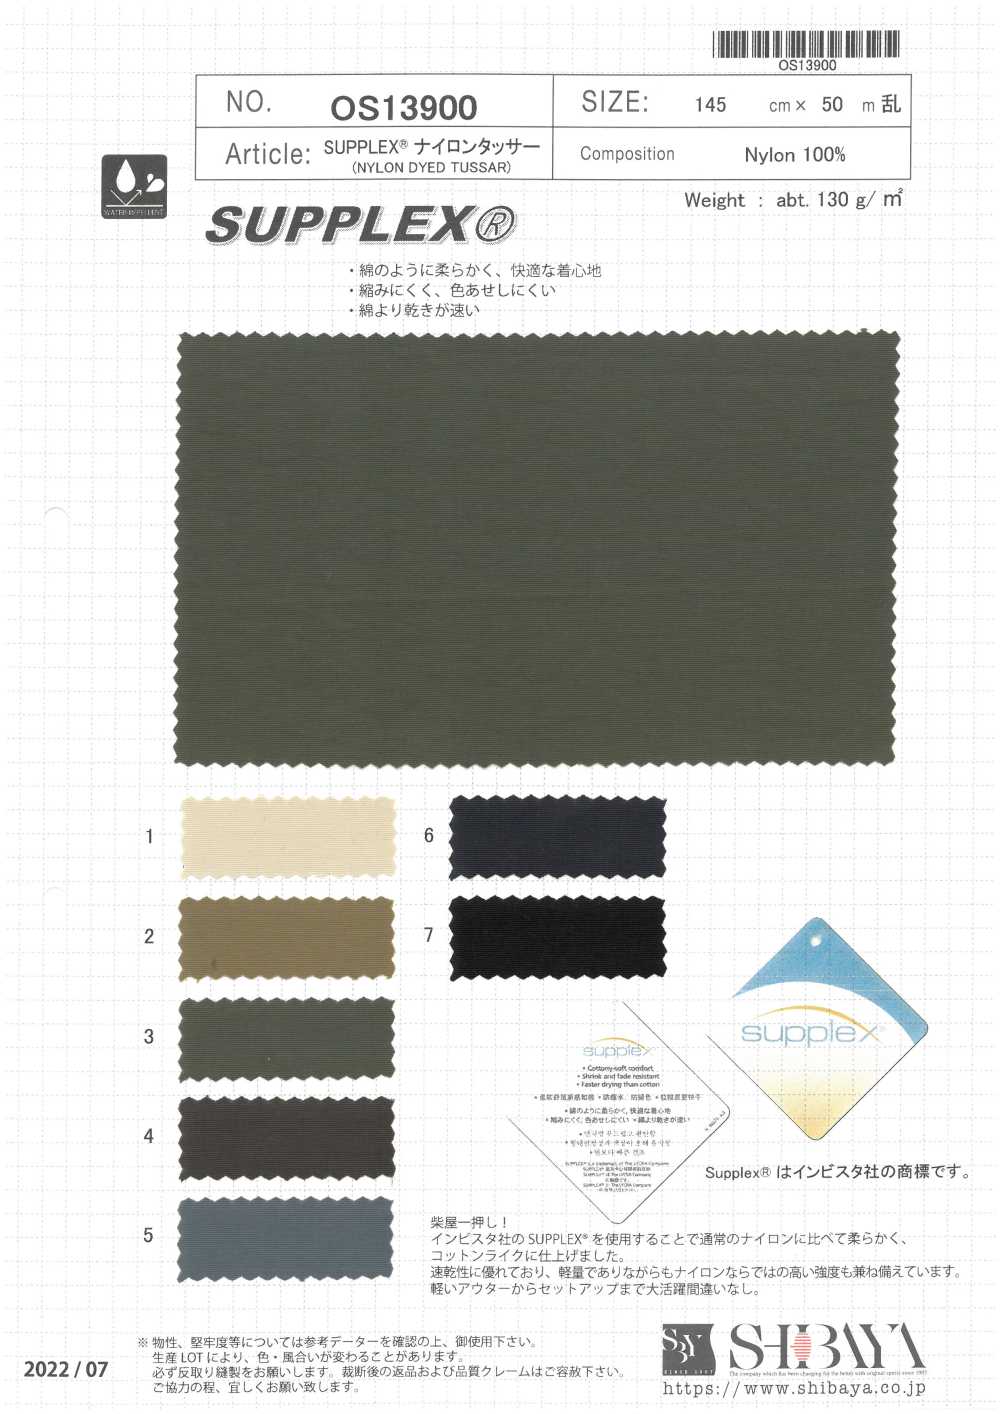 OS13900 SUPPLEX® Nylon-Tussar[Textilgewebe] SHIBAYA